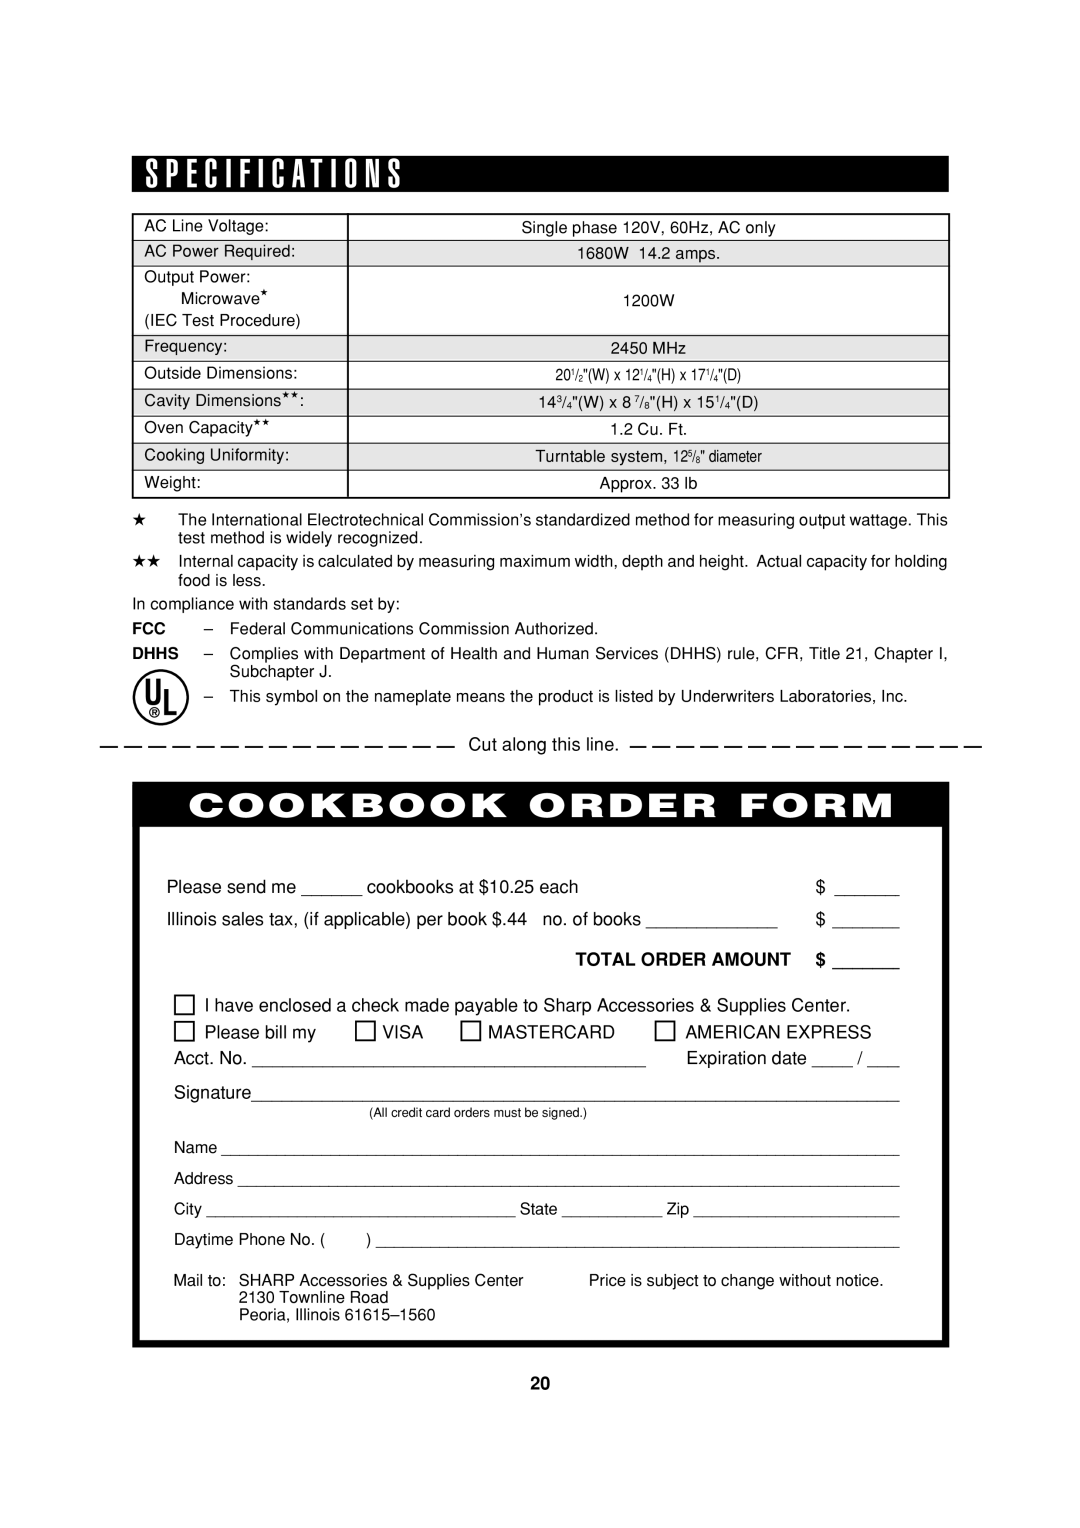 Food Quality Sensor R-320H operation manual S P E C I F I C A T I O N S, Cookbook Order Form, Total Order Amount 